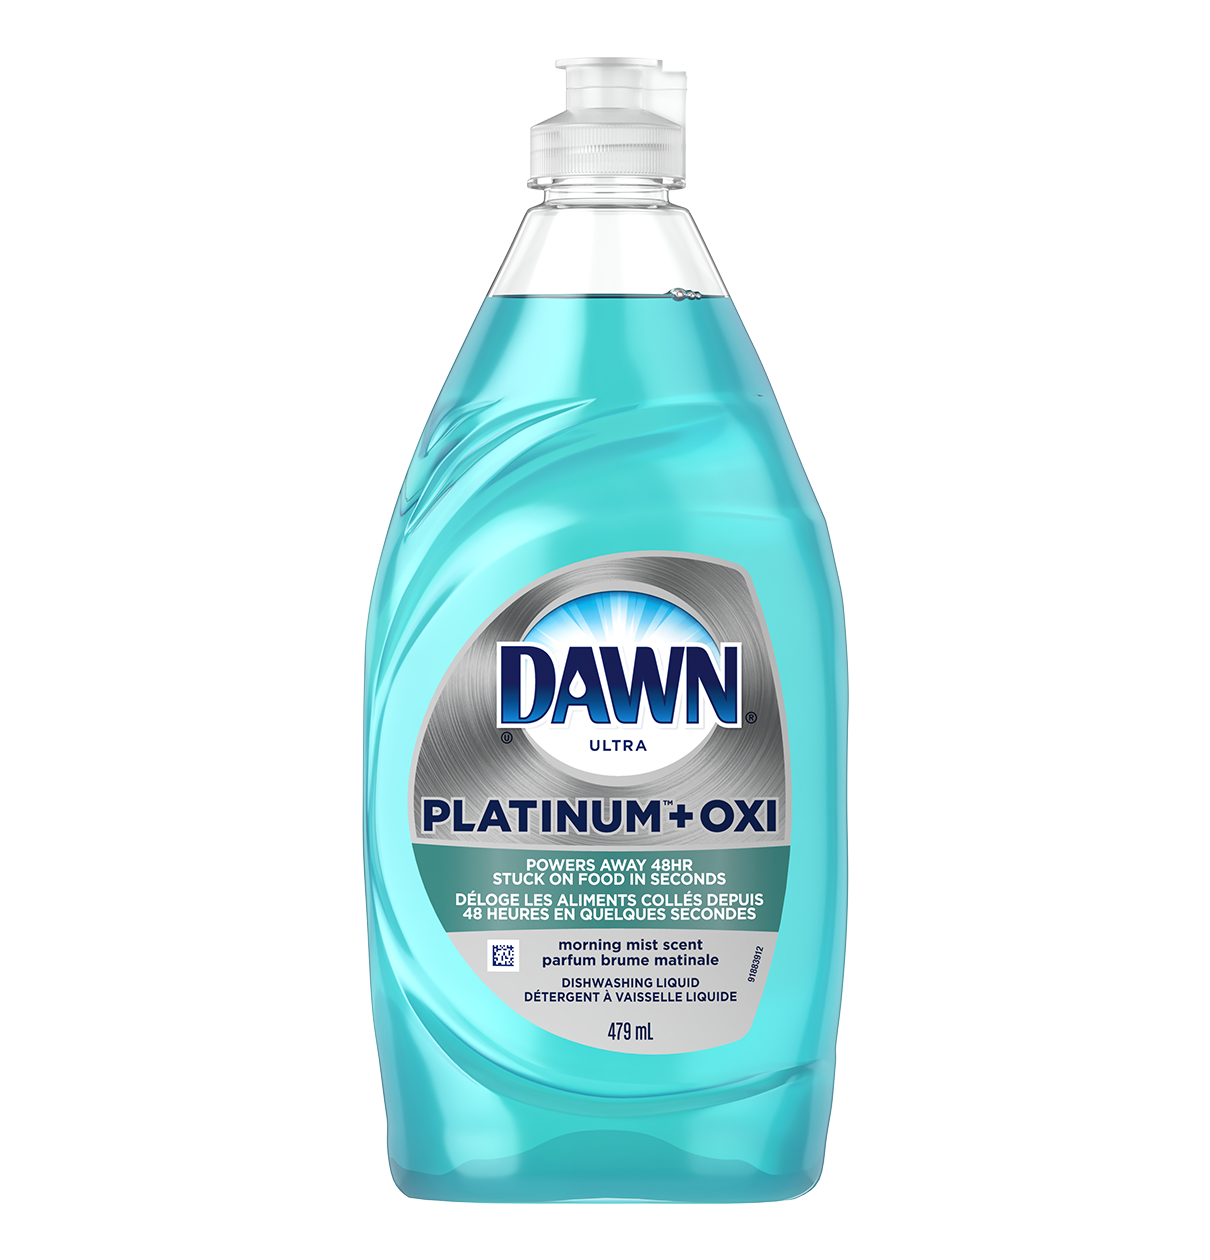 Dawn Oxi - Liquide à vaisselle, bruine matinale | Savon à vaisselle Dawn